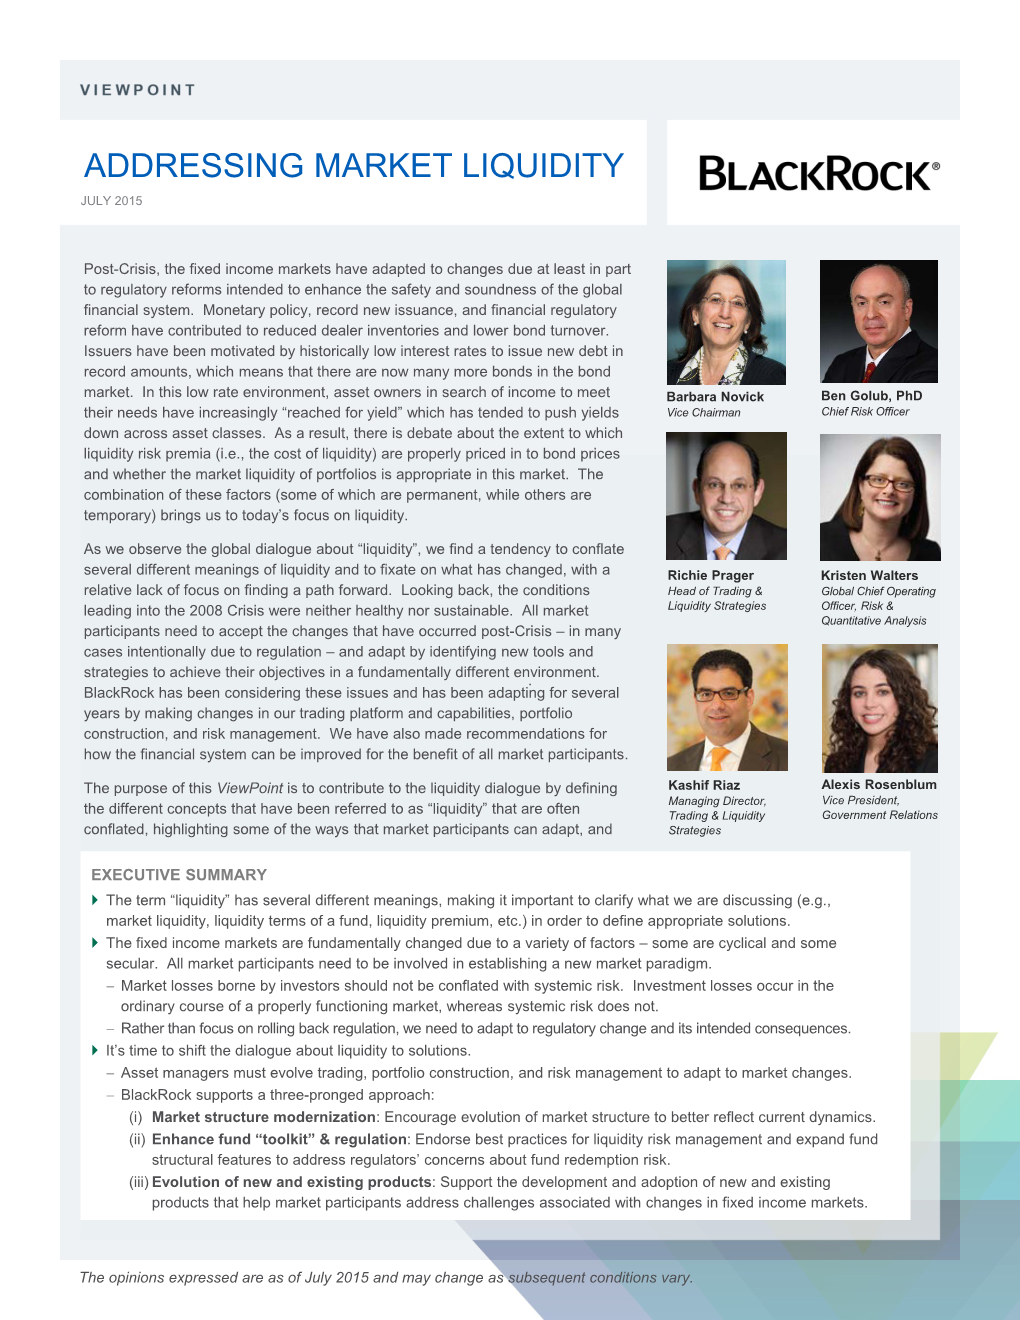 Addressing Market Liquidity July 2015